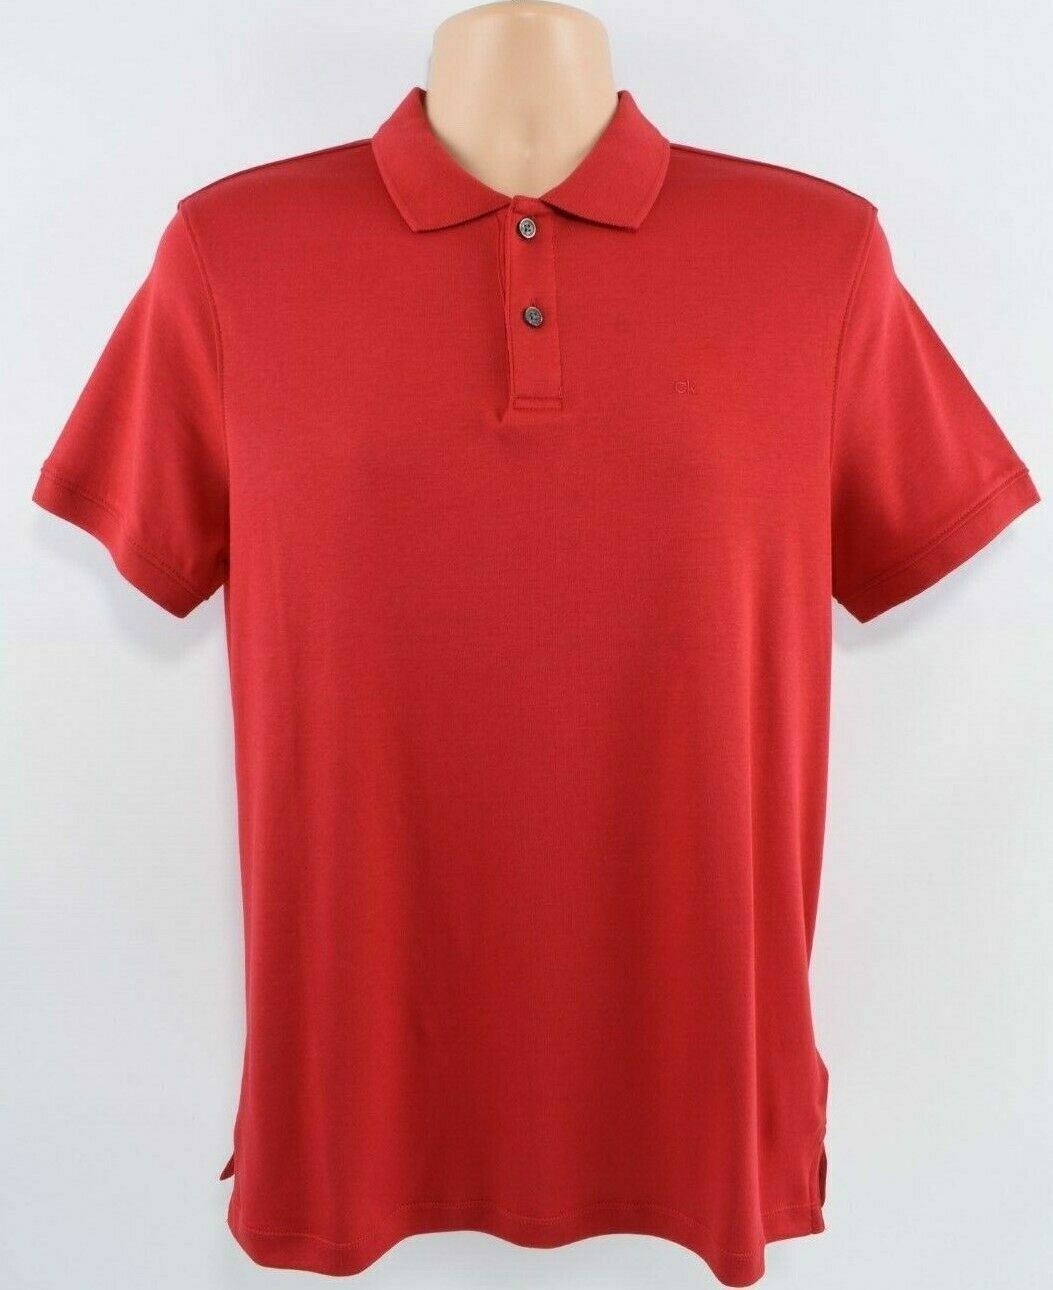 CALVIN KLEIN Men's Liquid Touch Cotton Polo Shirt, Chilli Pepper Red, size S